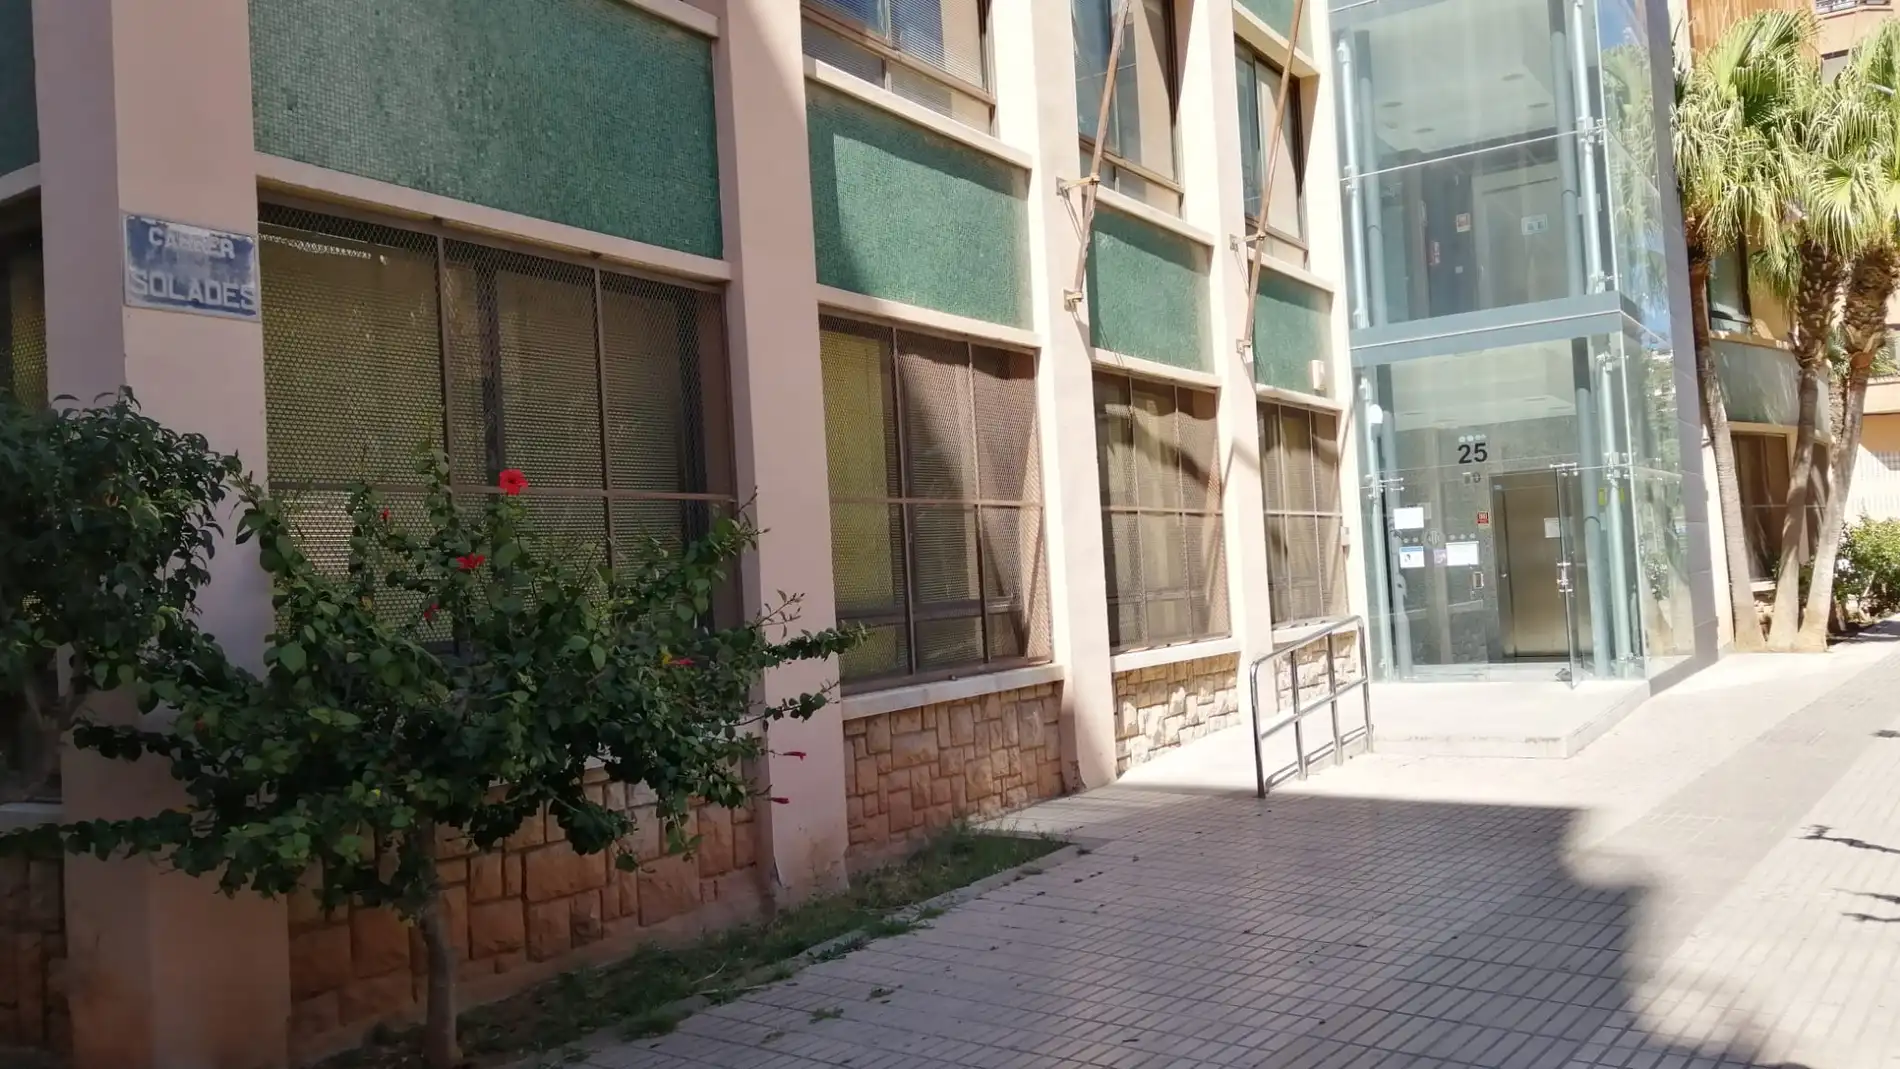 Vila-real aprovecha la antigua biblioteca de Solades para abrir una sala de estudio